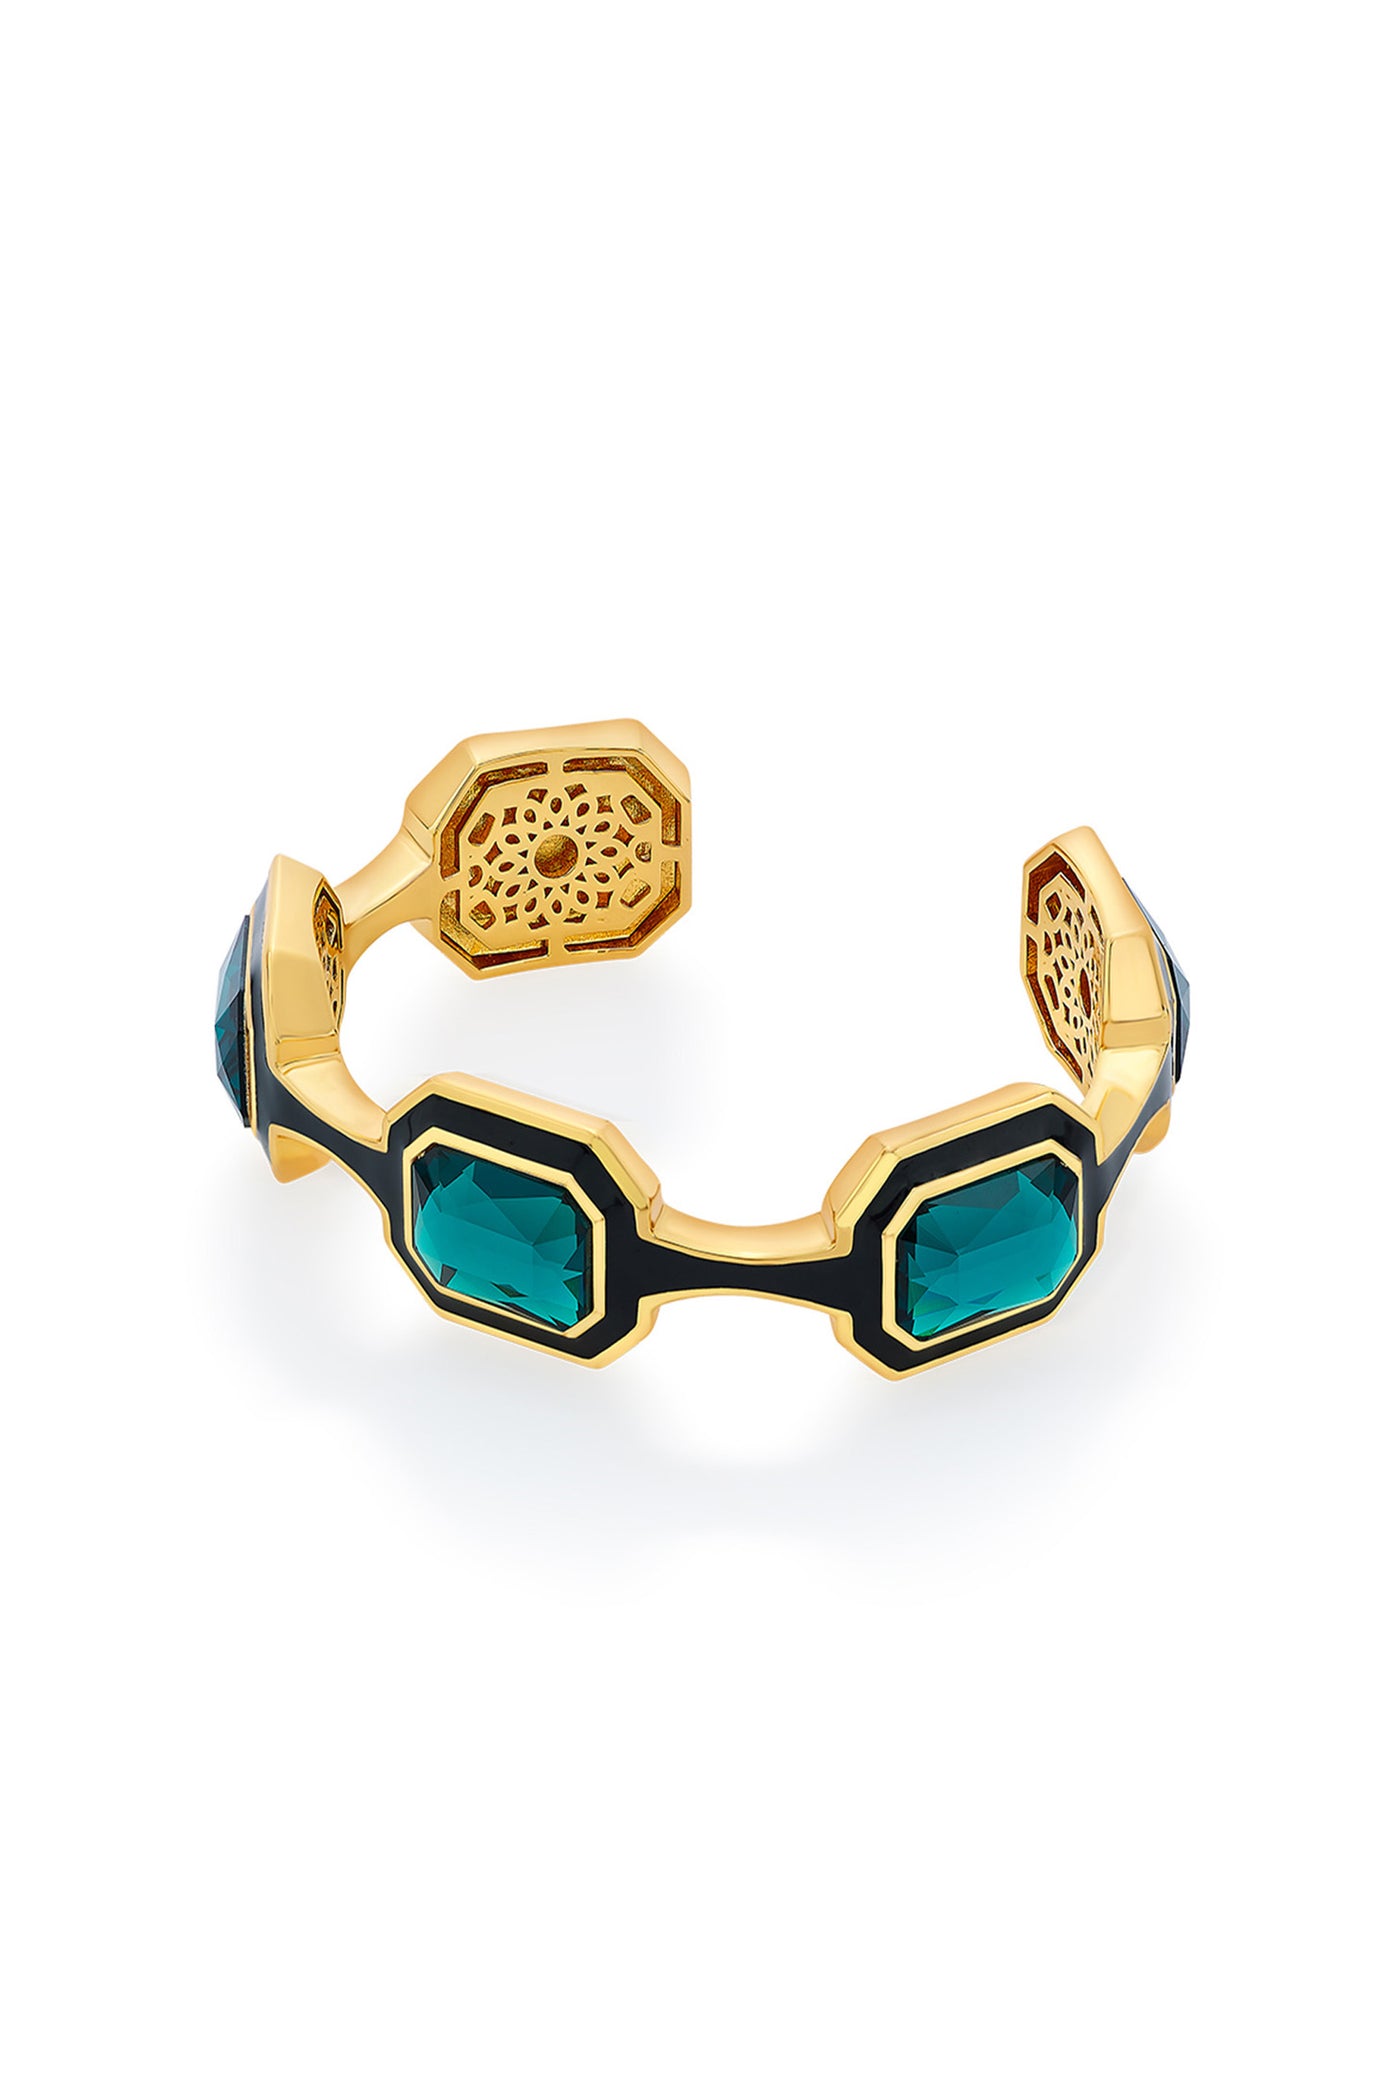 Isharya B-dazzle Green Crystal Bezel Cuff In 18Kt Gold Plated fashion jewellery online shopping melange singapore indian designer wear